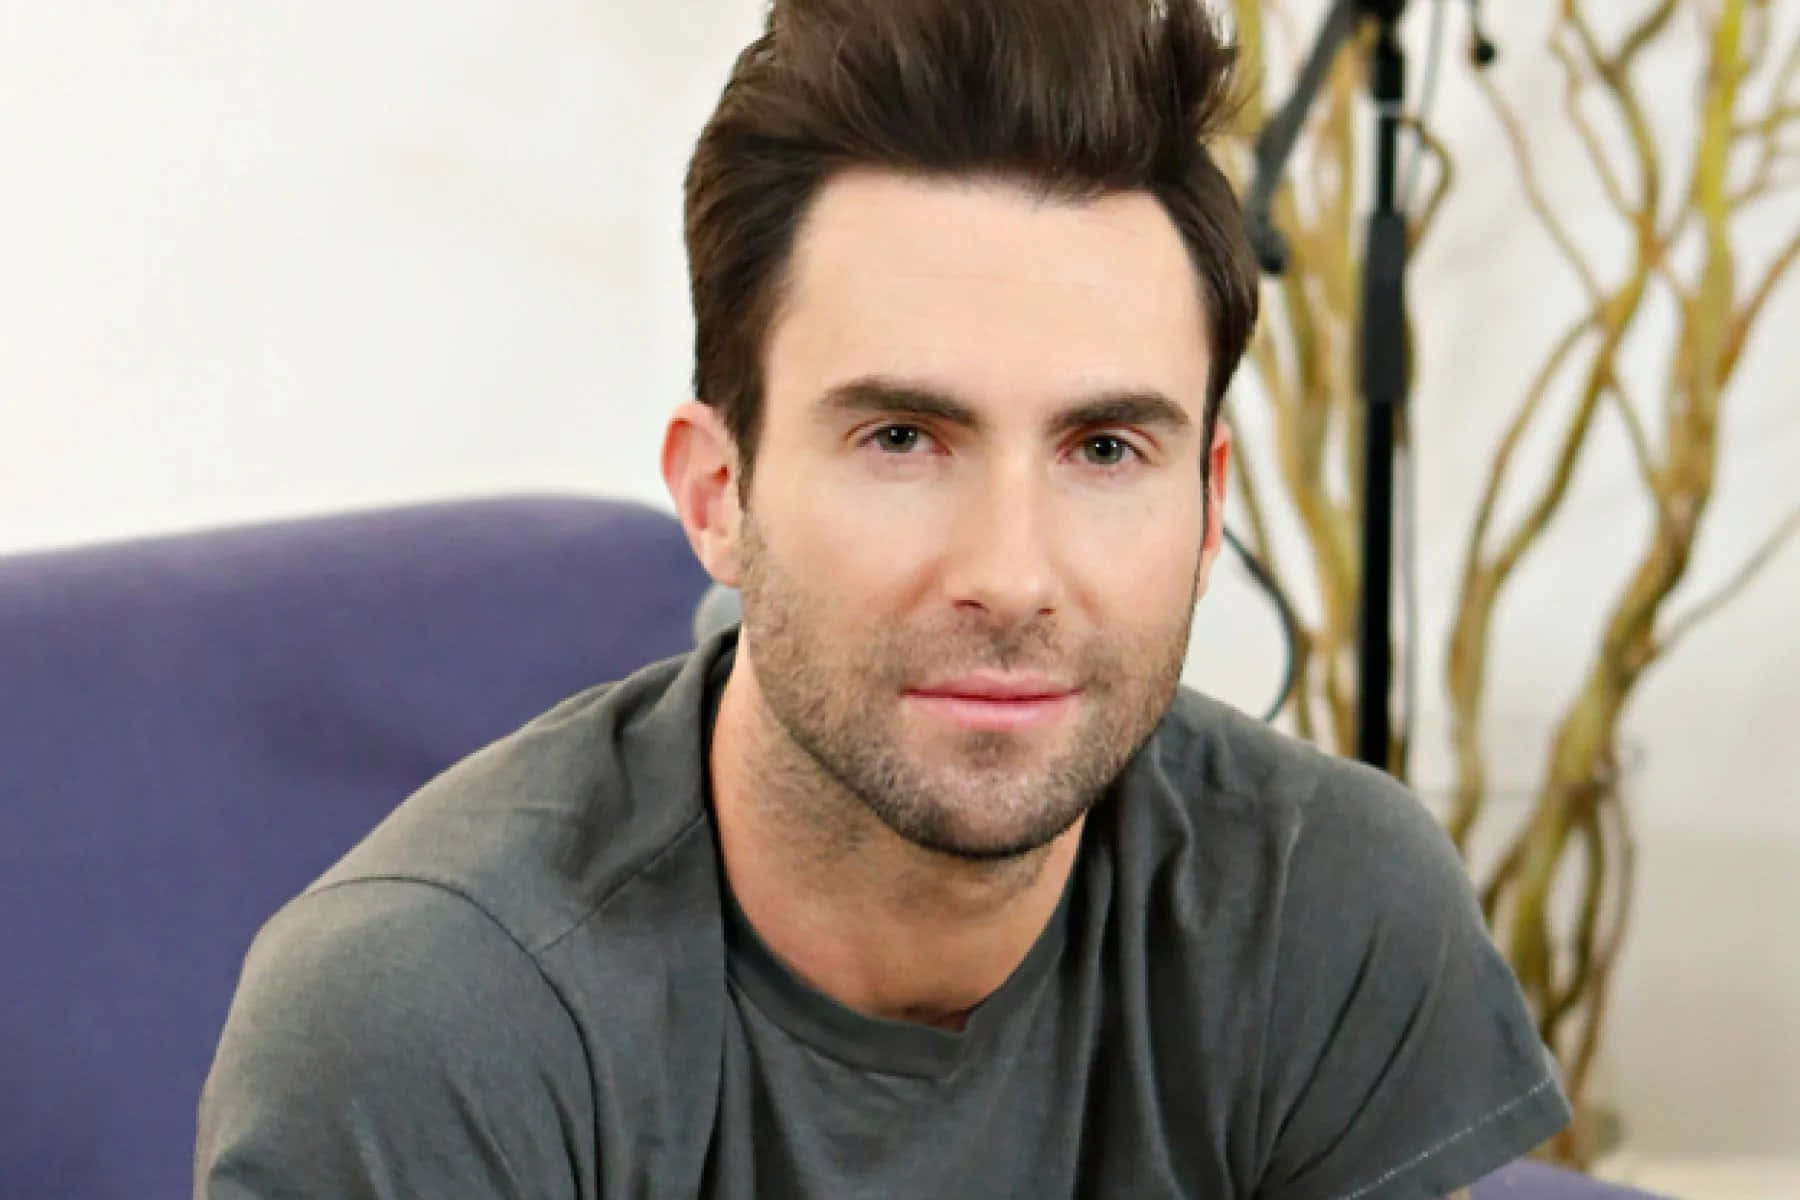 A stylish Adam Levine rocks his signature look